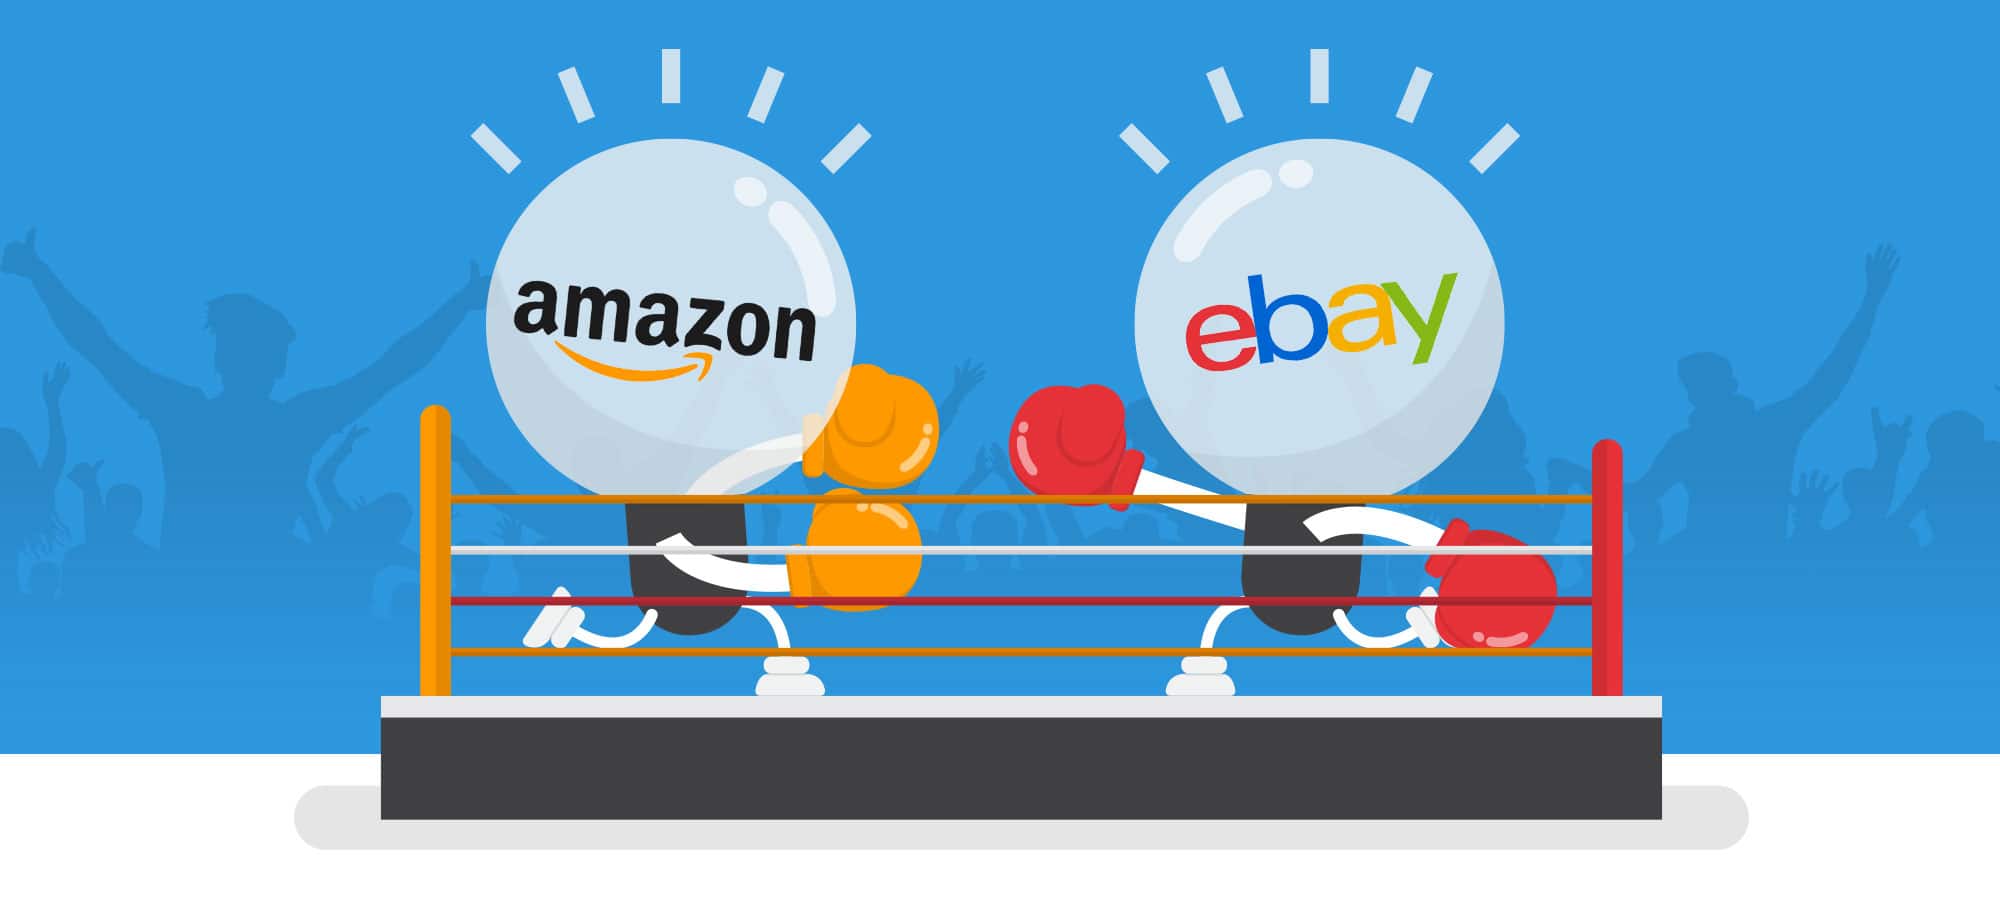 Amazon vs. Ebay - Which one is best?